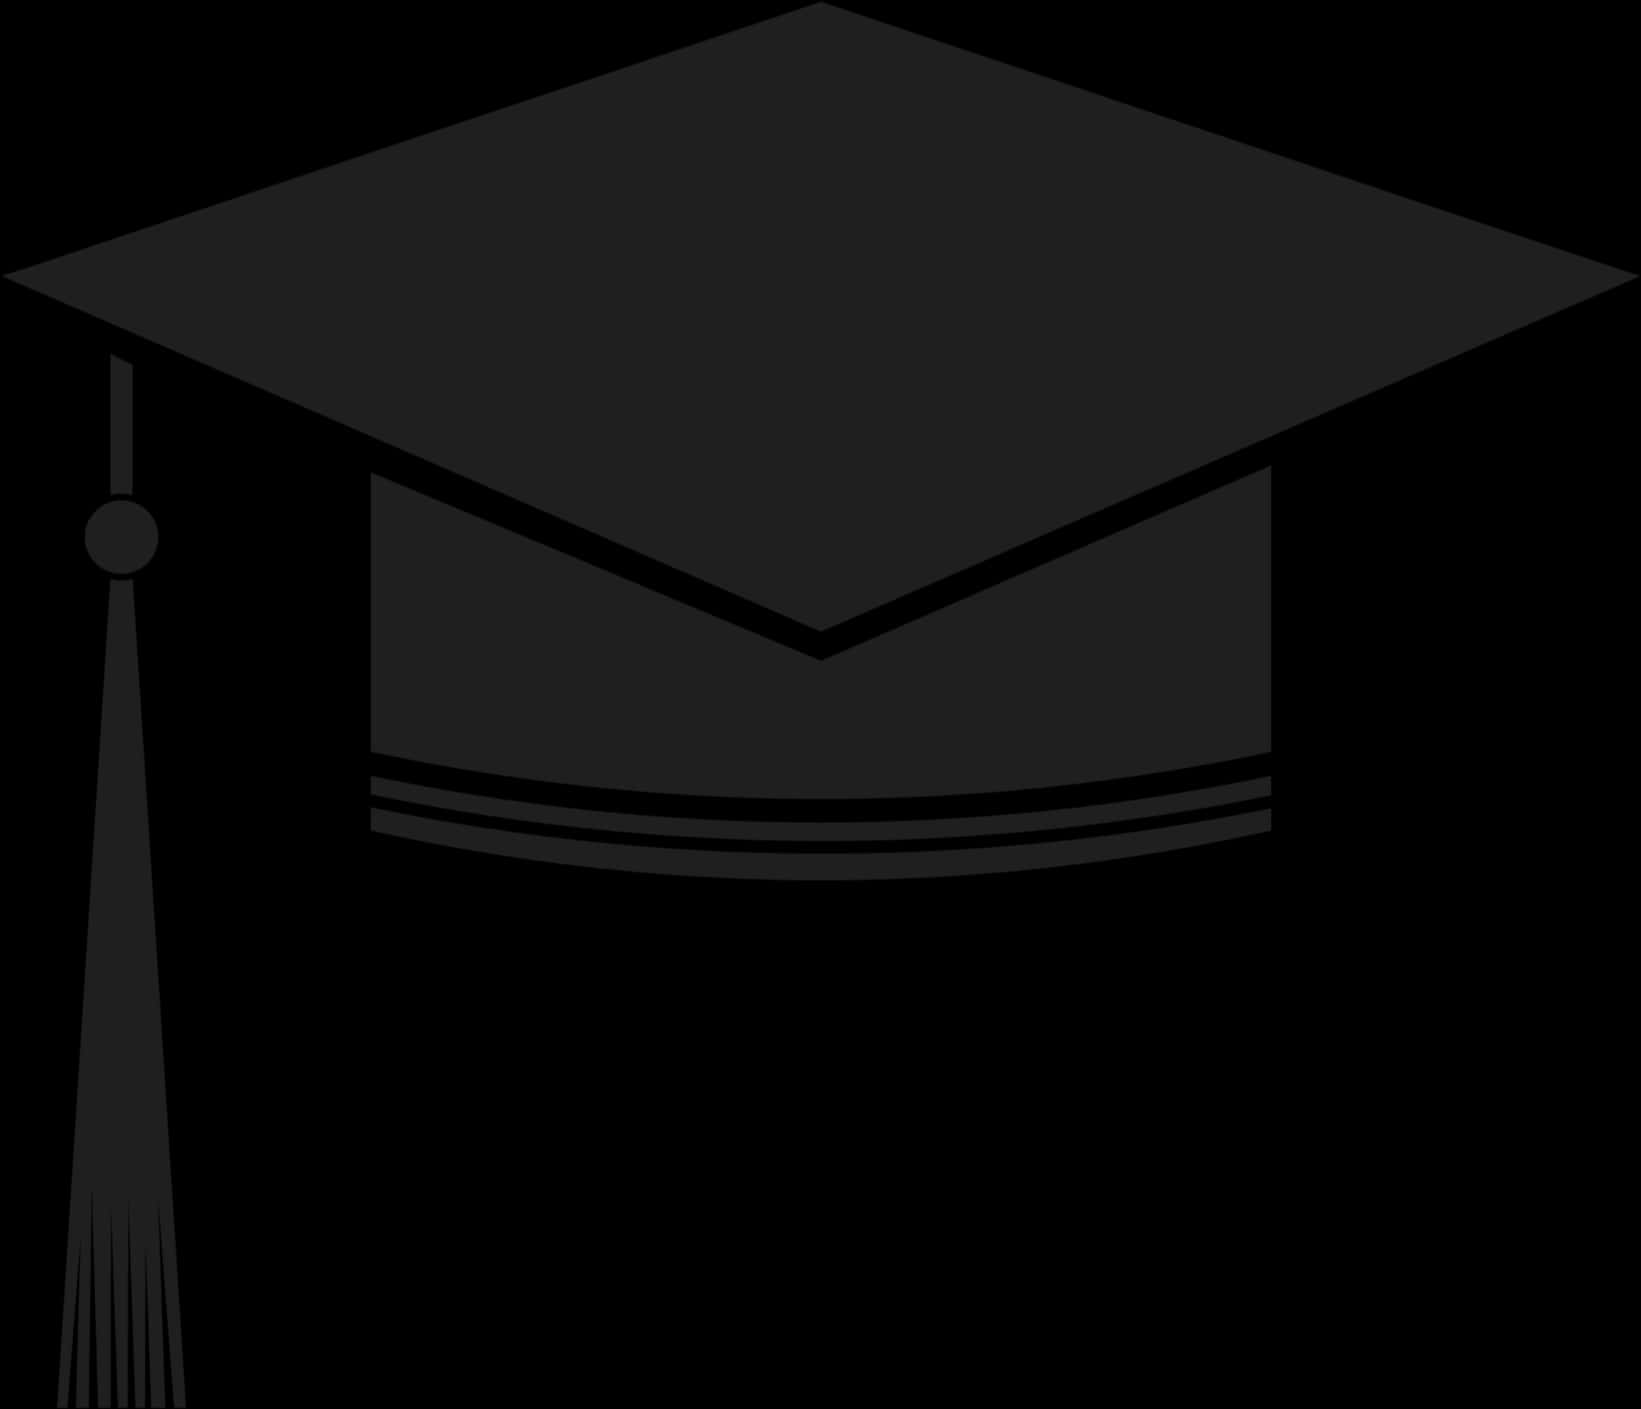 A Black Graduation Cap With Tassel